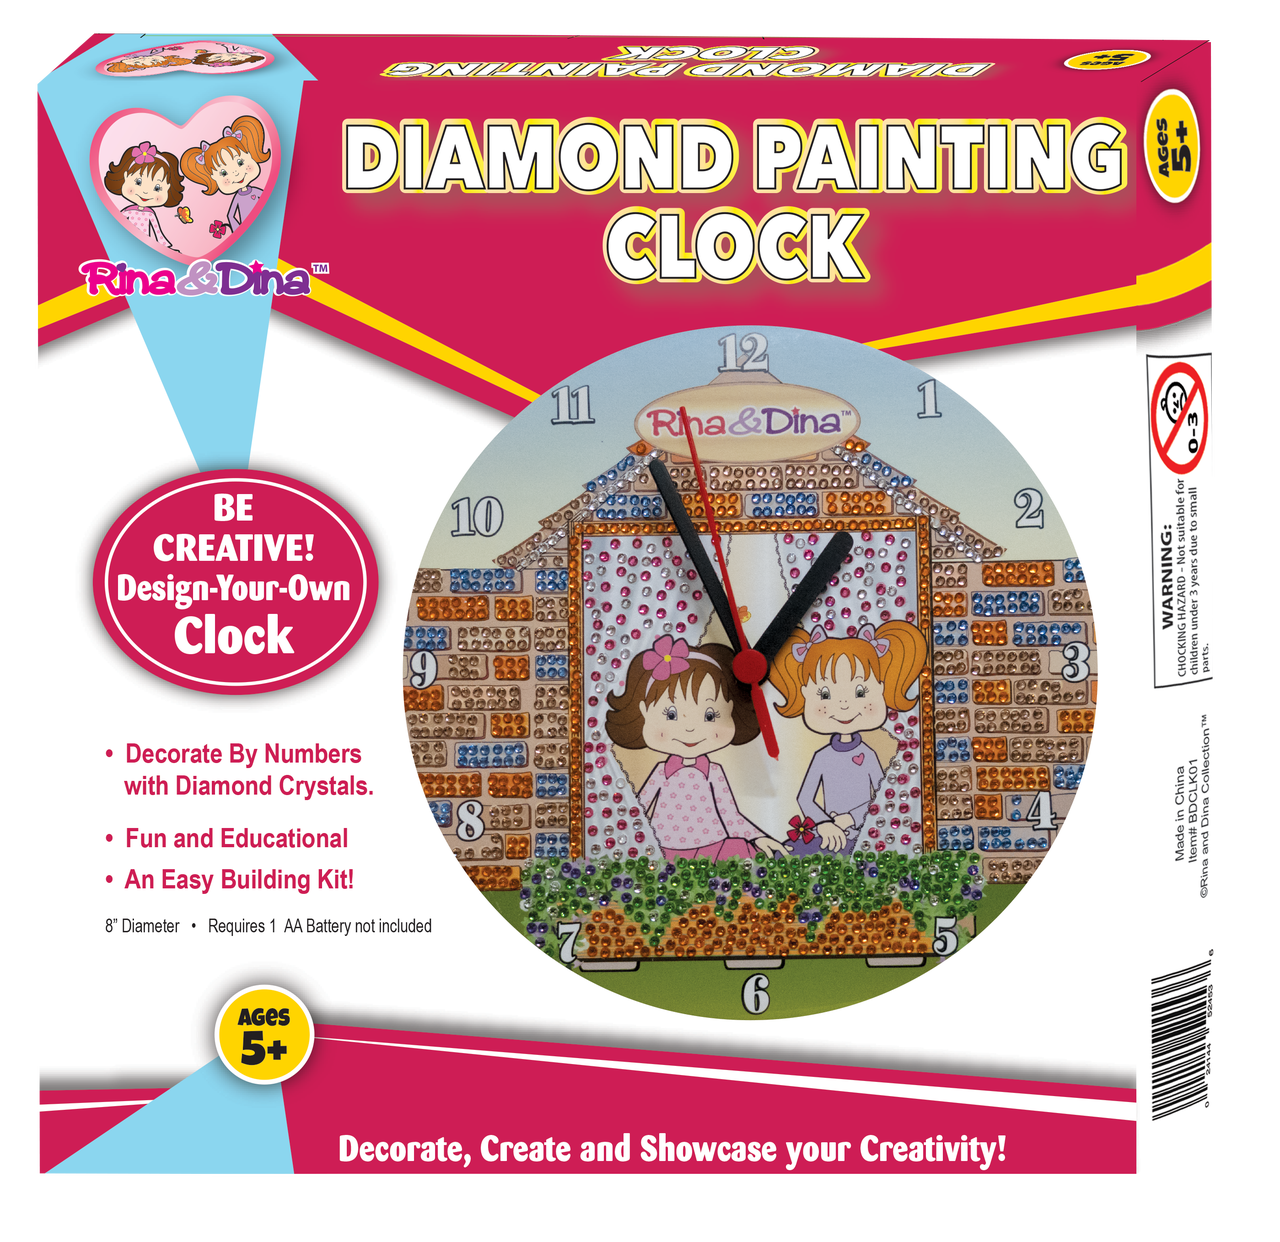 Rina and Dina Friends Diamond Painting Clock - Double Play